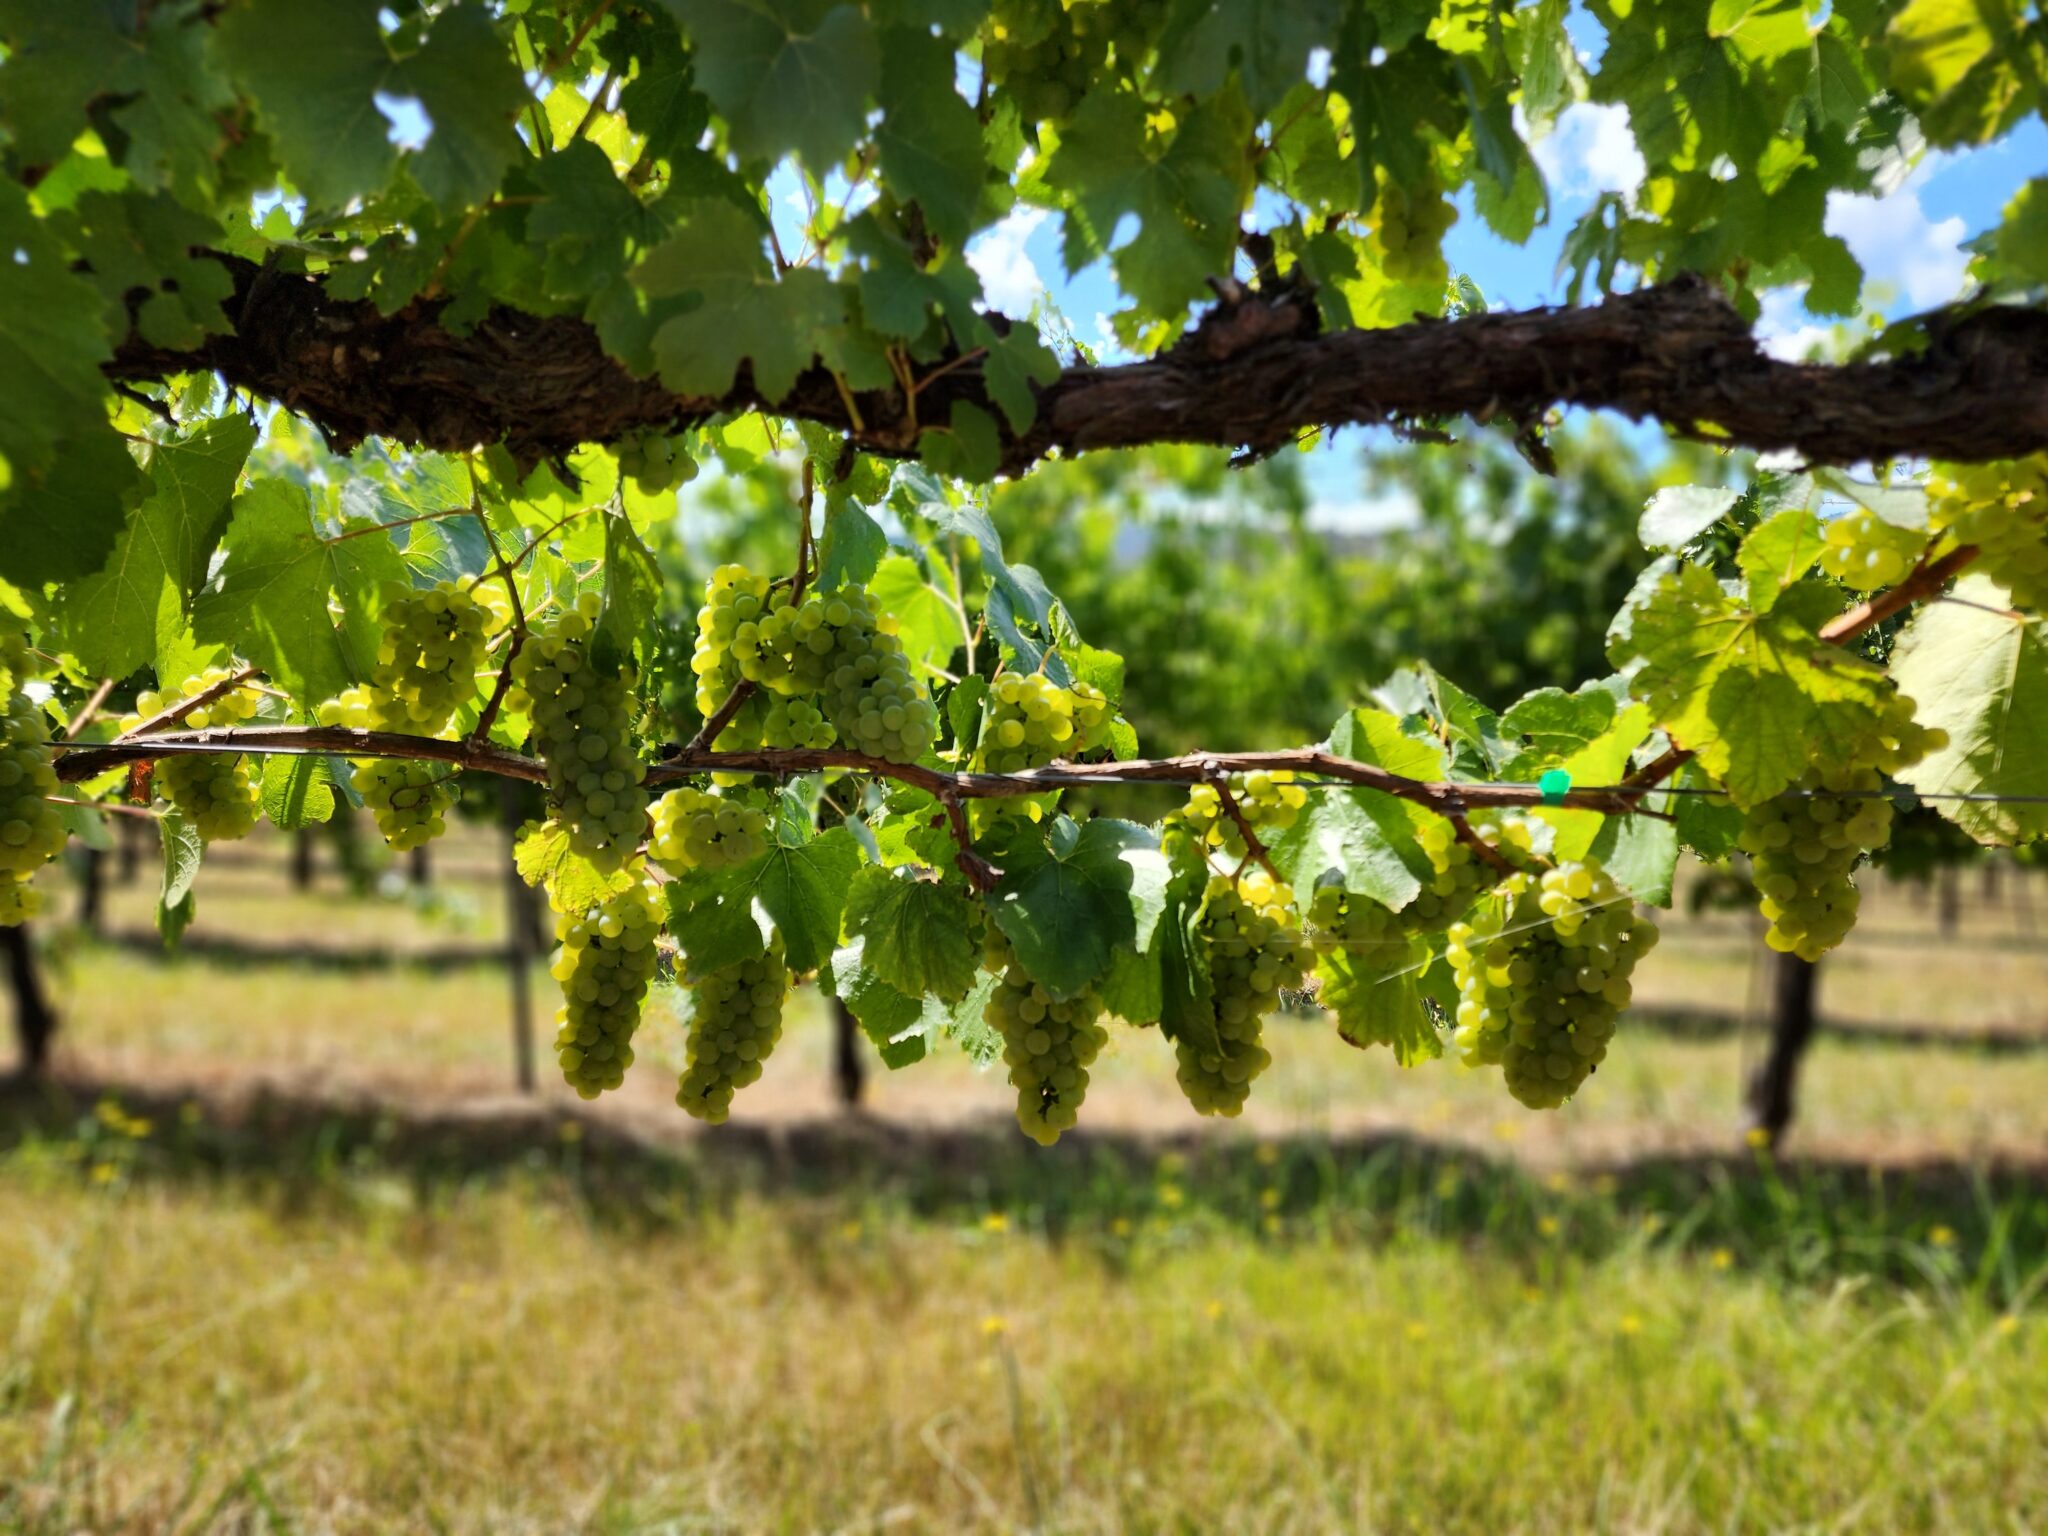 Gruner Veltliner grapes 'the groovy' our grooviest wine